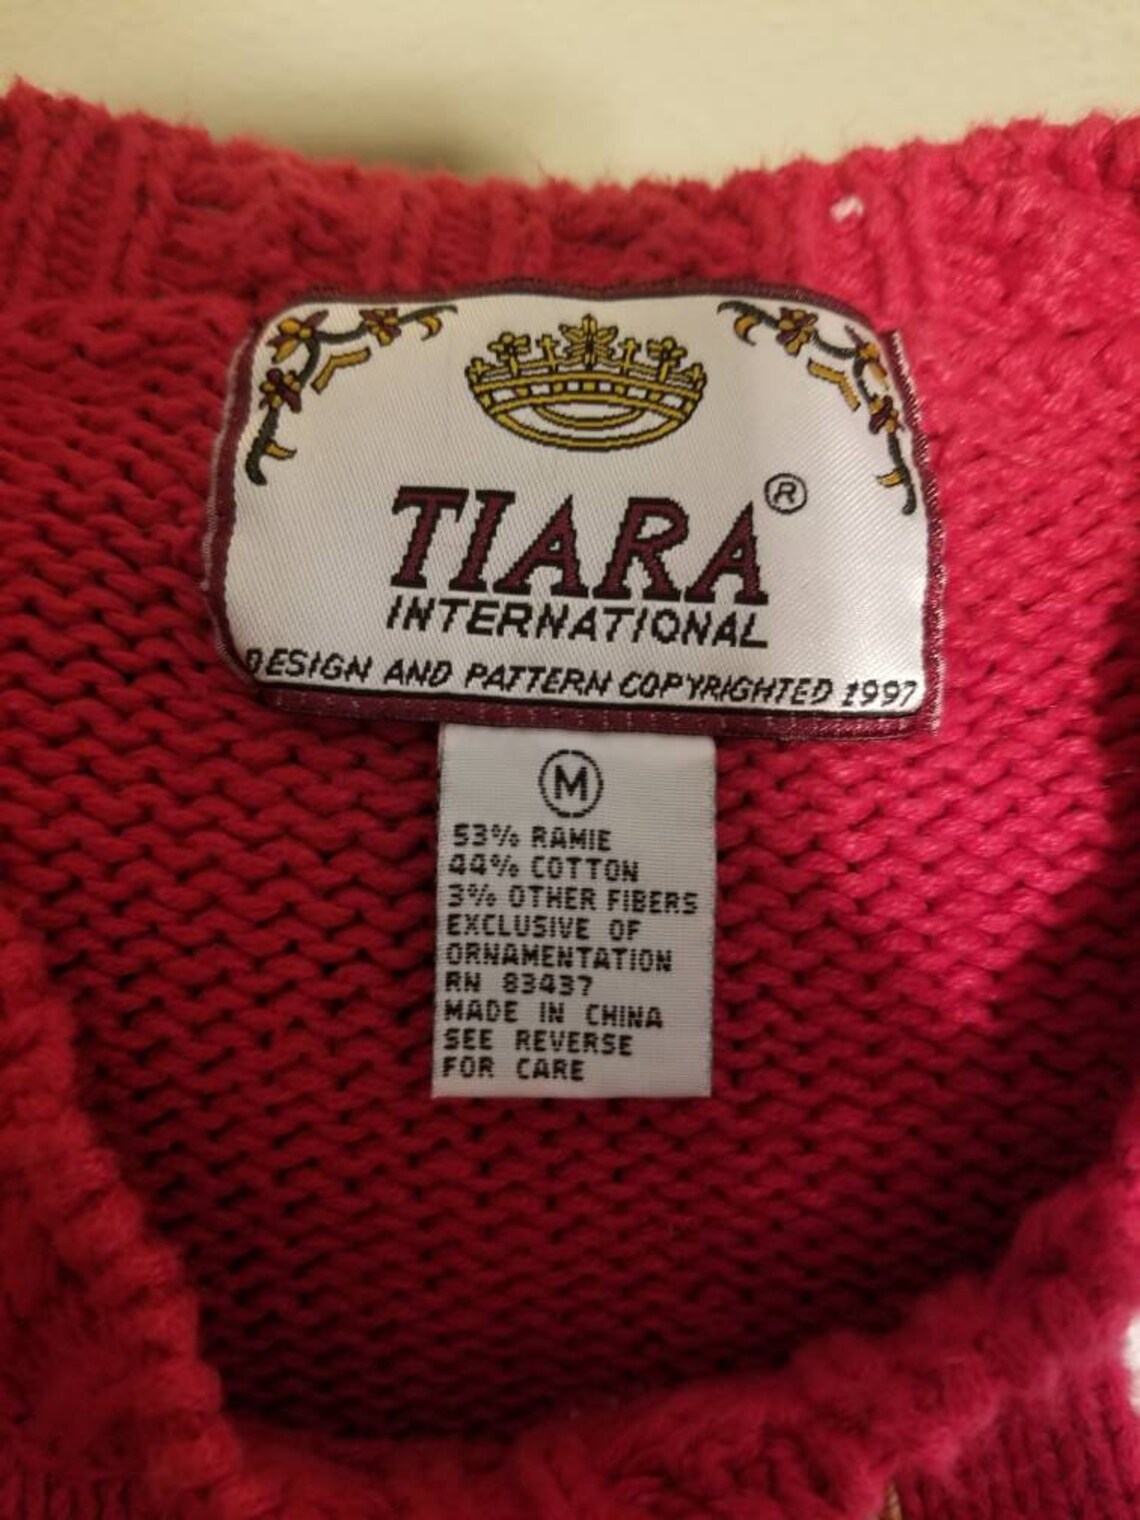 Tiara International Vintage Christmas sweater | Etsy